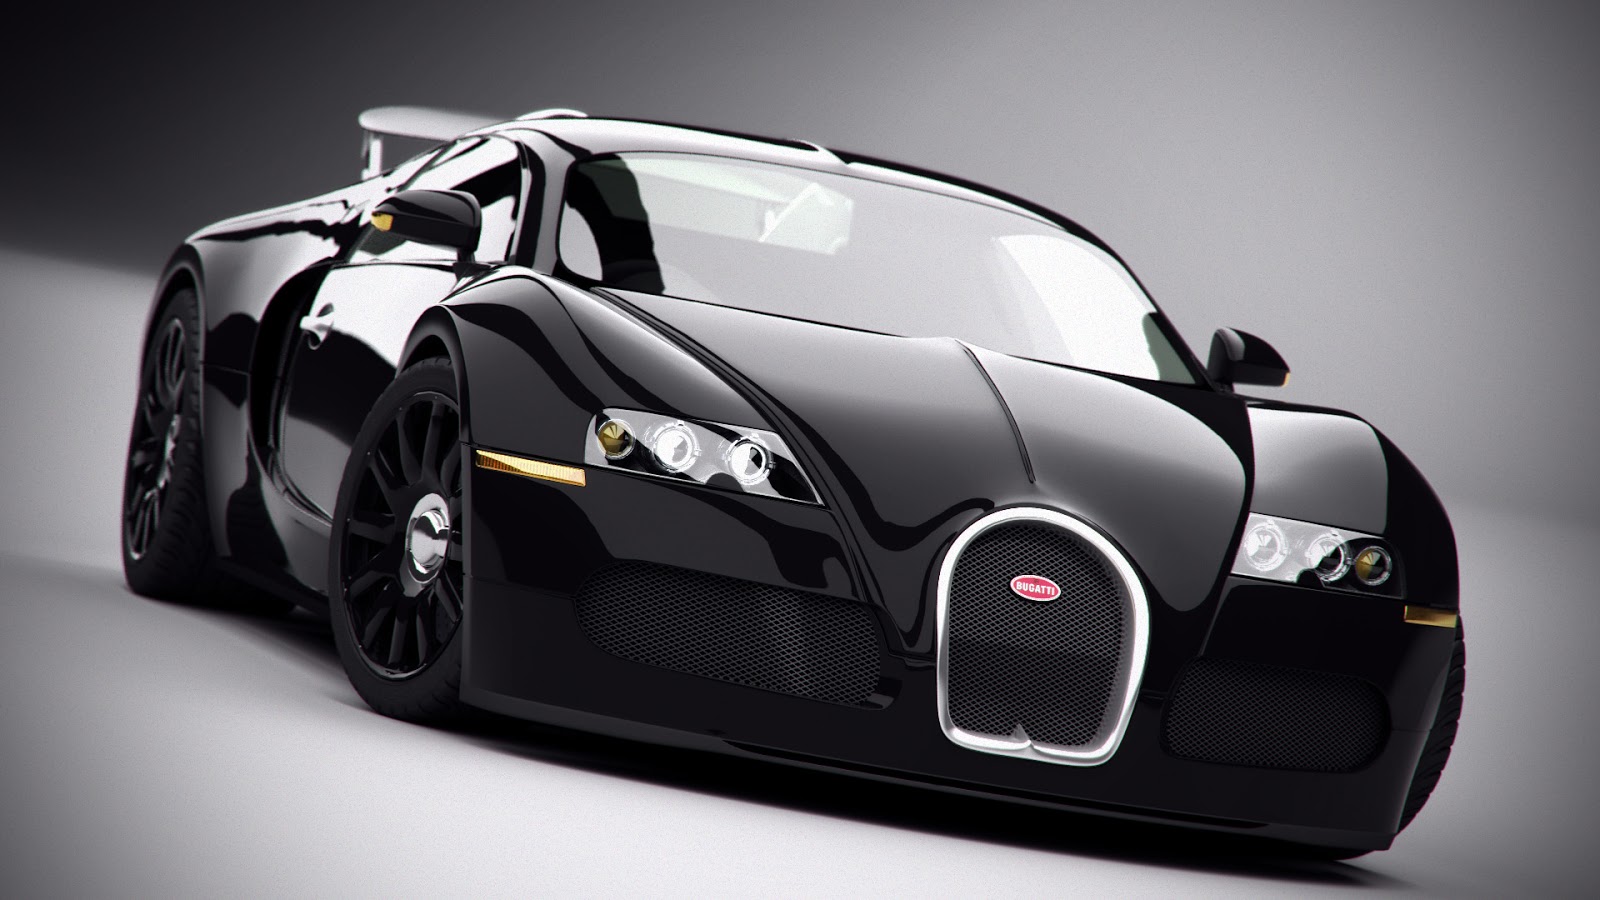 50 Bugatti Veyron Wallpaper Hd For Laptop - Bugatti Car Hd Wallpapers 1080p - HD Wallpaper 